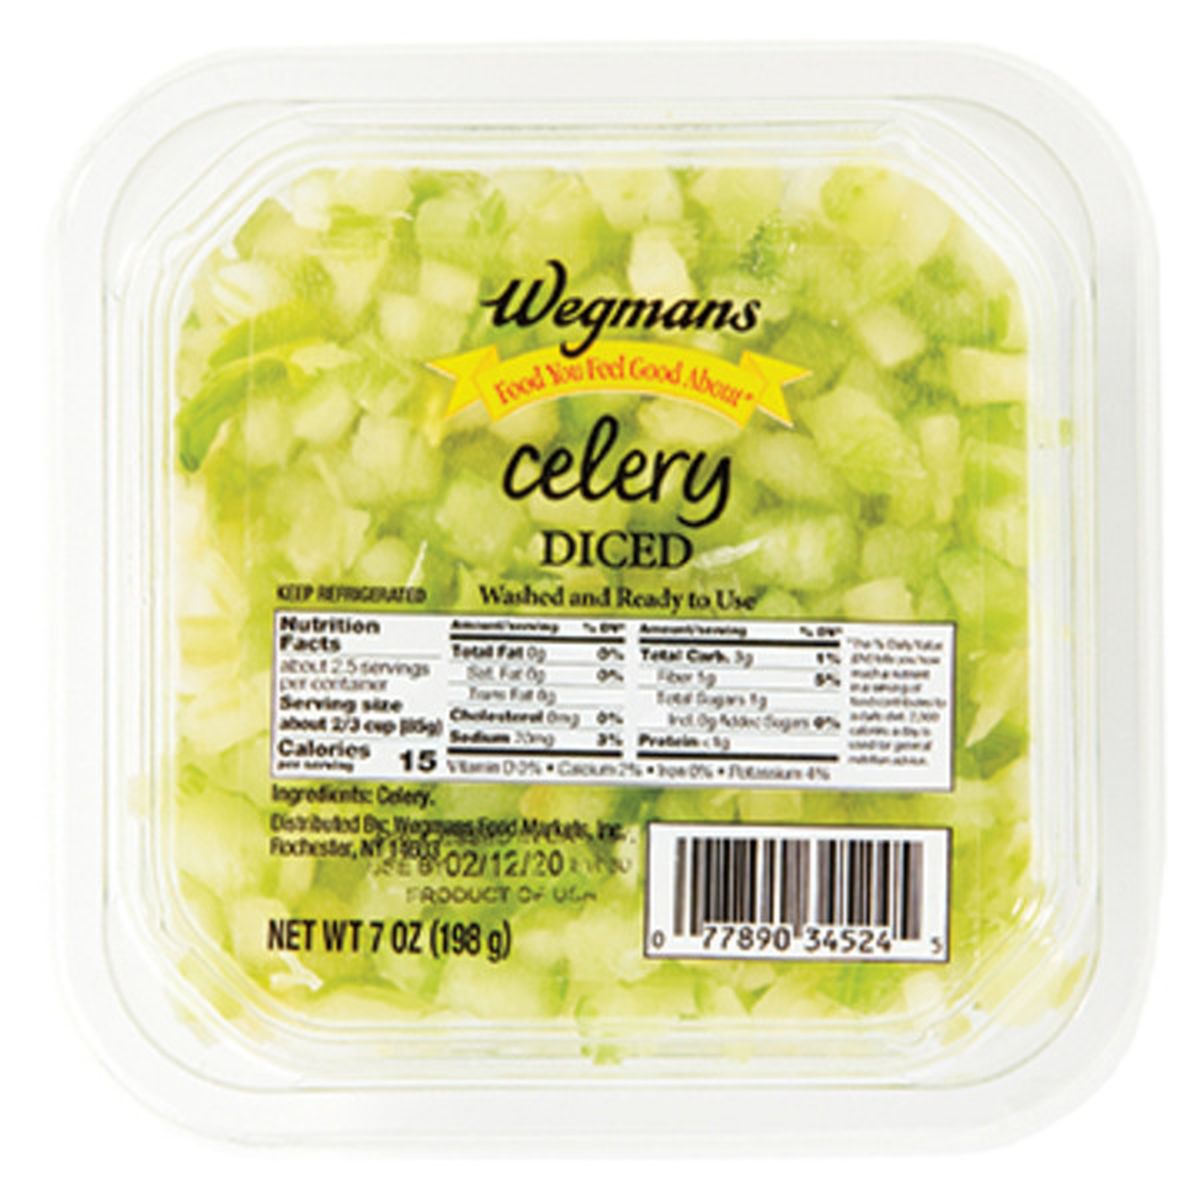 Calories in Wegmans Diced Celery